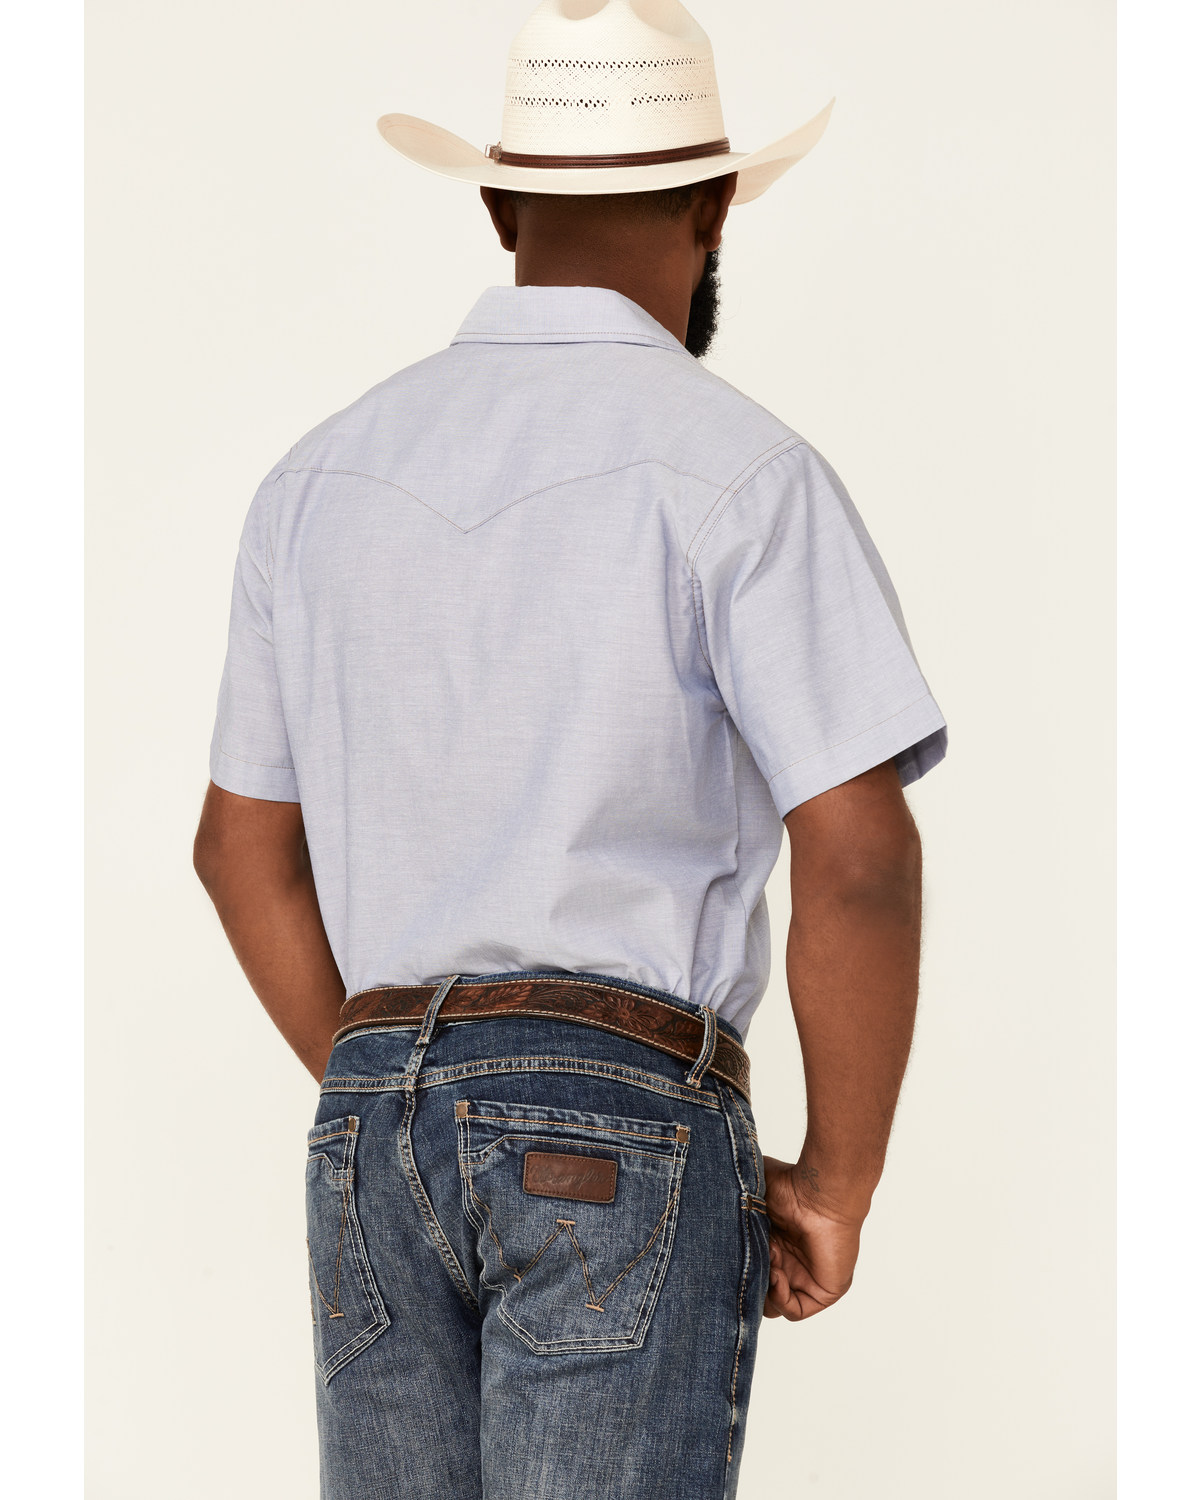 Wrangler Chambray Short Sleeve Work - Mens Shirt  - 1070131Mw - image 4 of 4